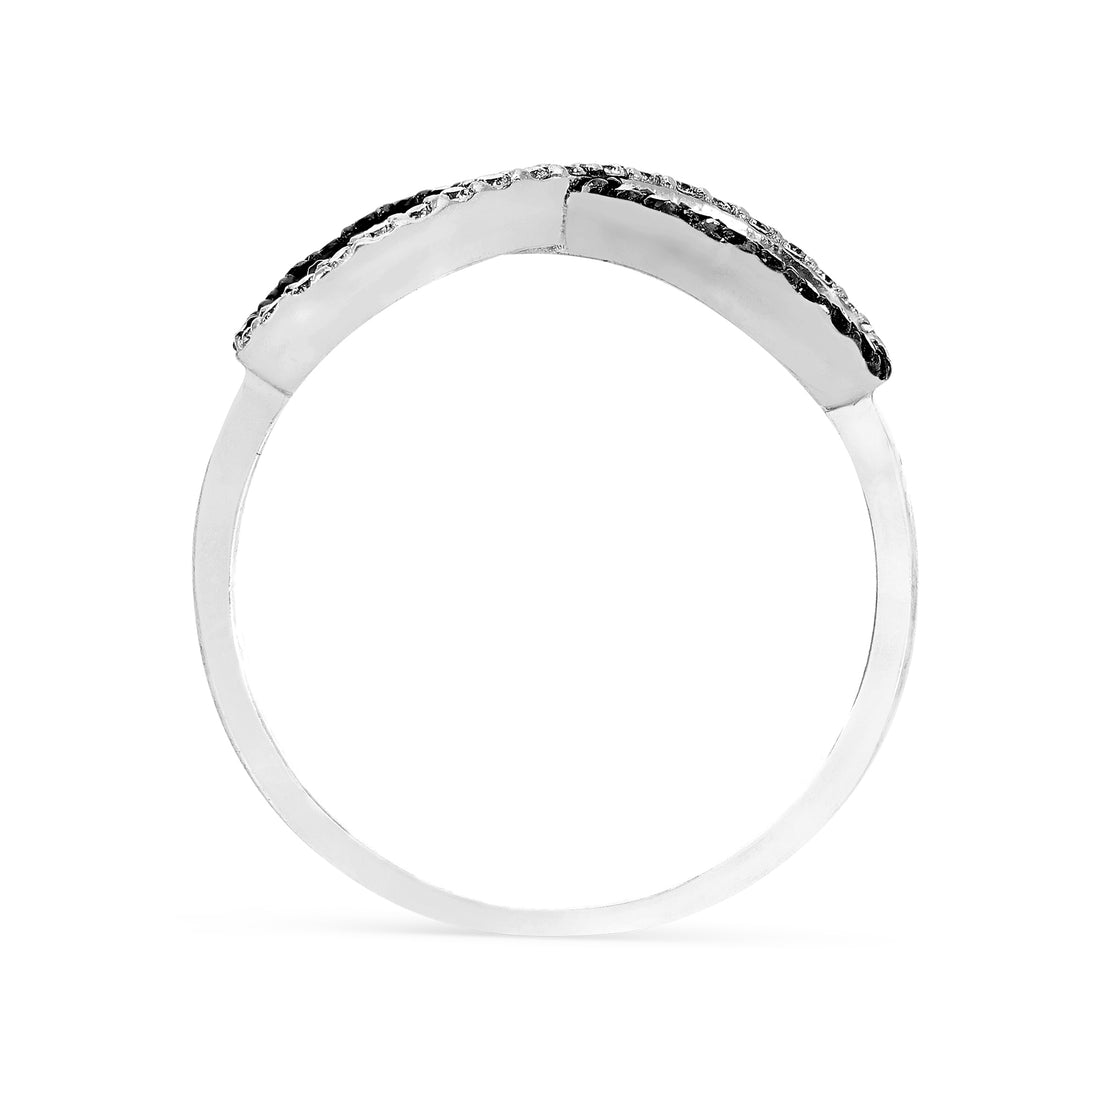 Black and White Diamond Infinity Ring